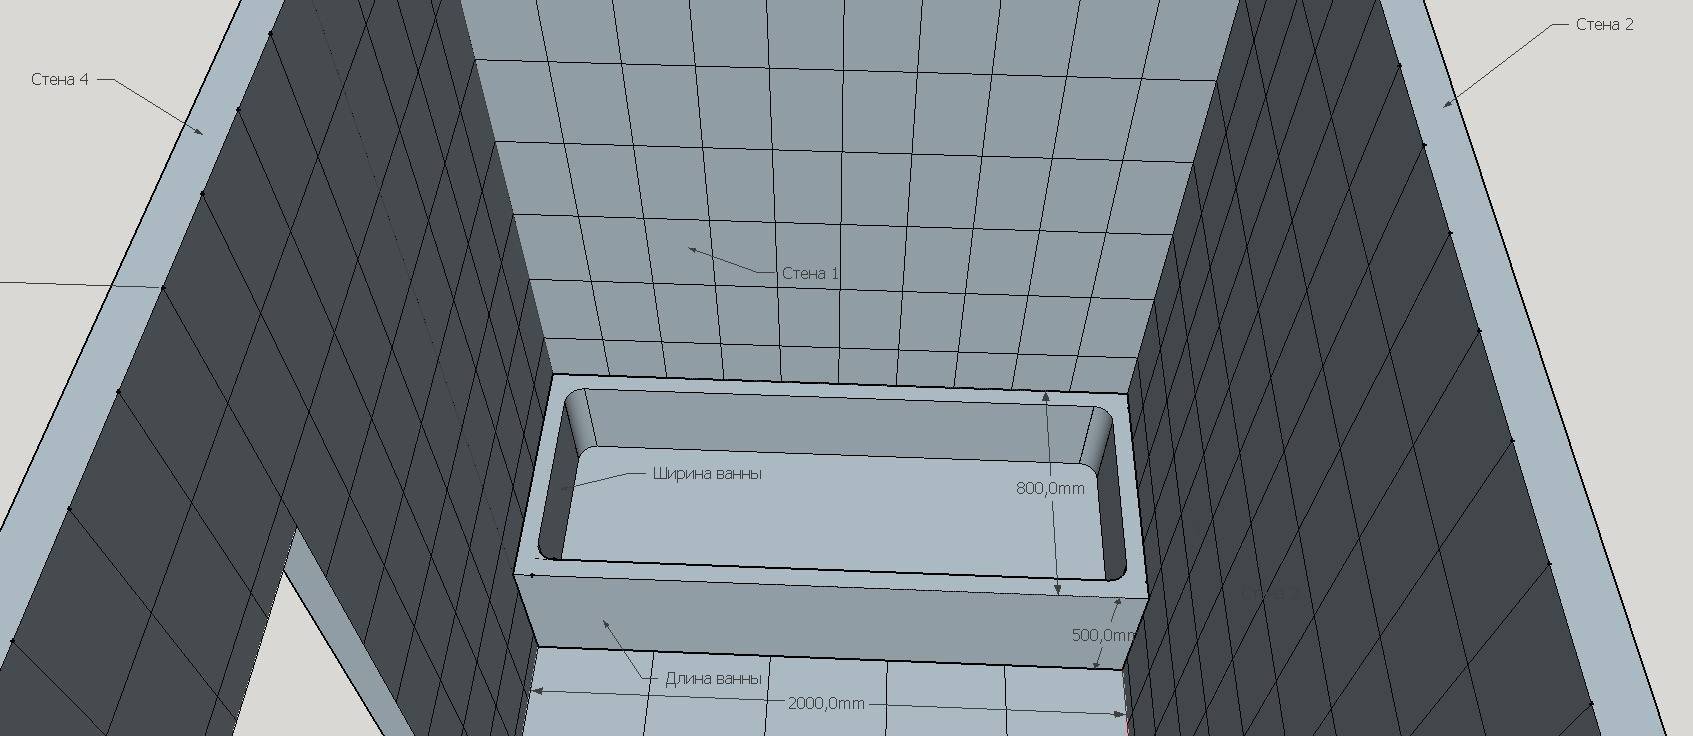 Онлайн калькулятор для расчёта плитки на ванную комнату, туалет и пол